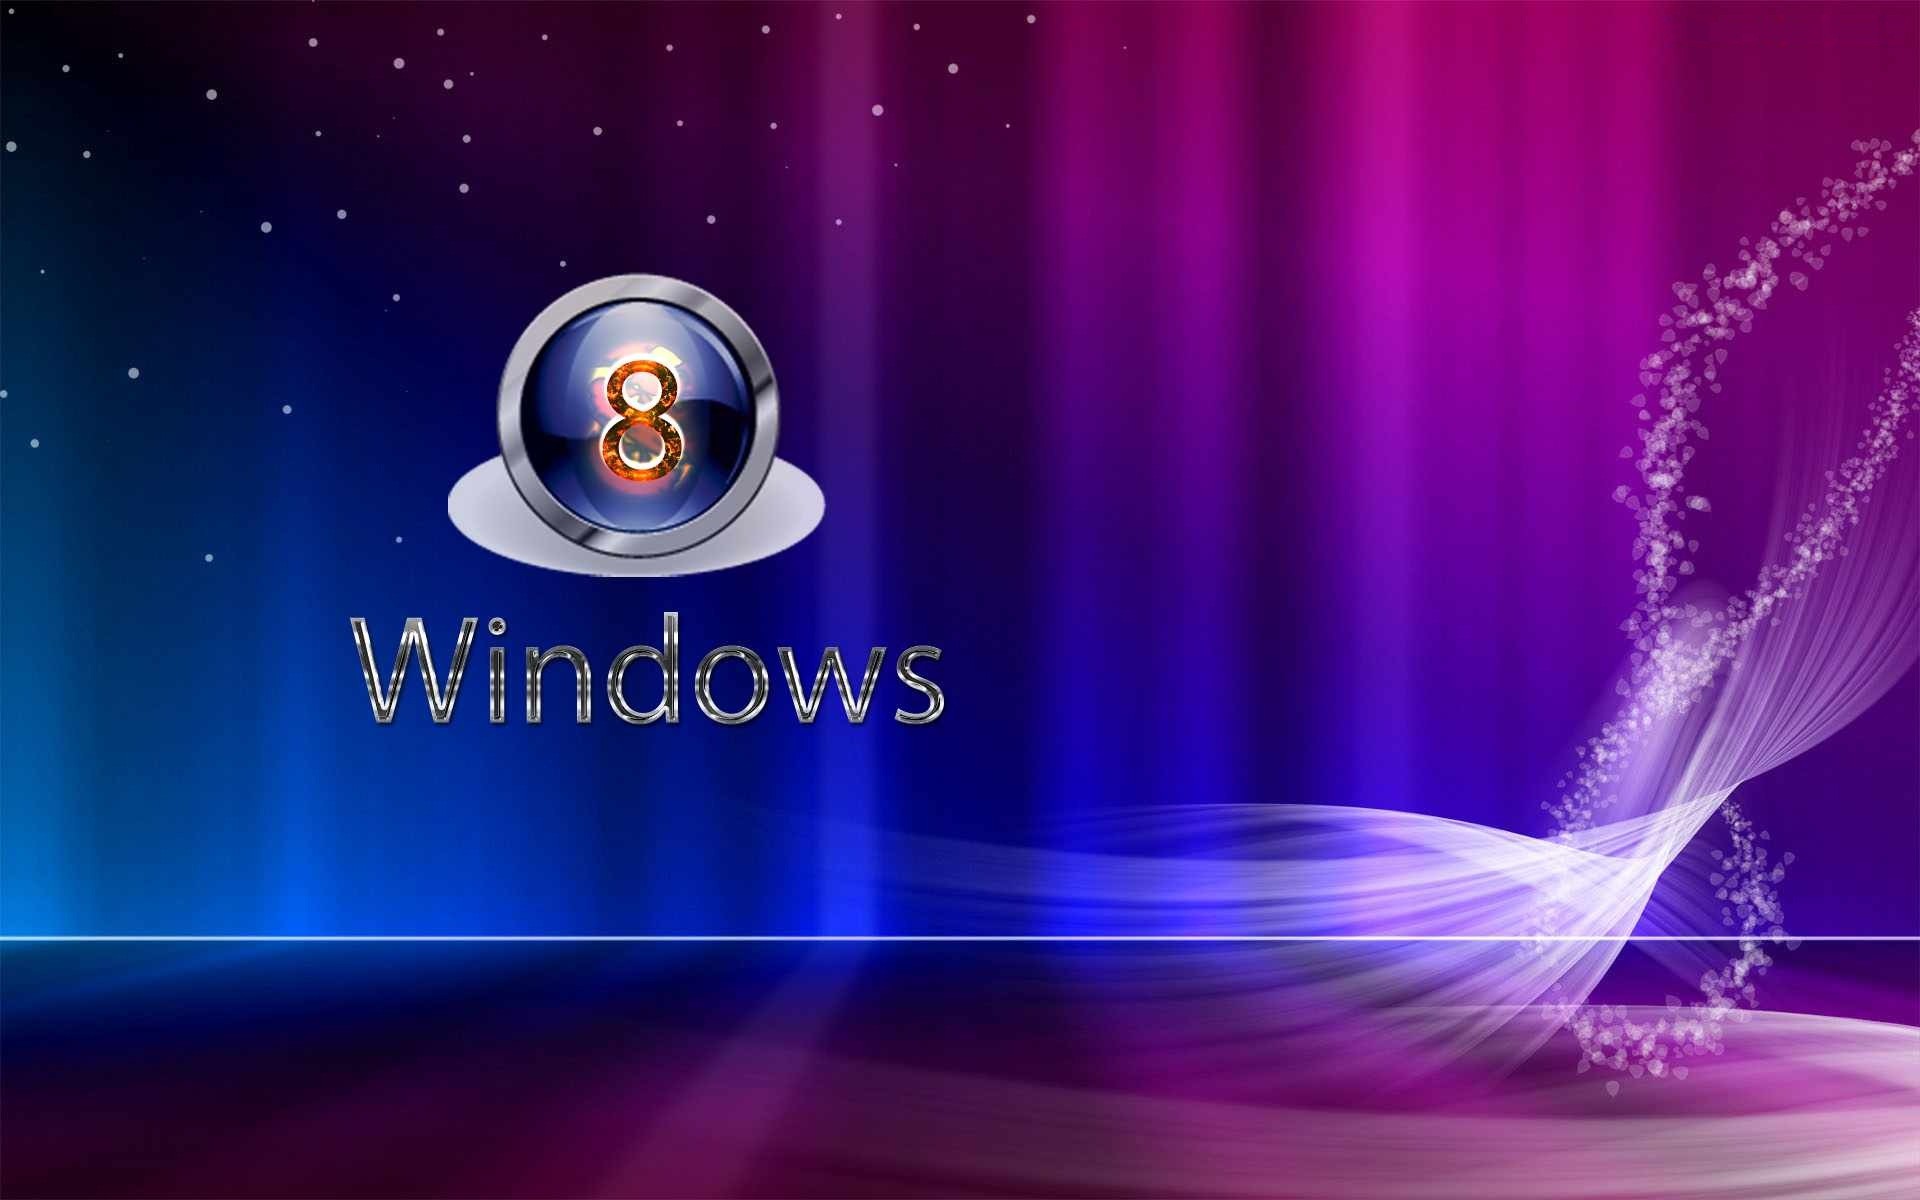 Windows 81 live wallpaper free download